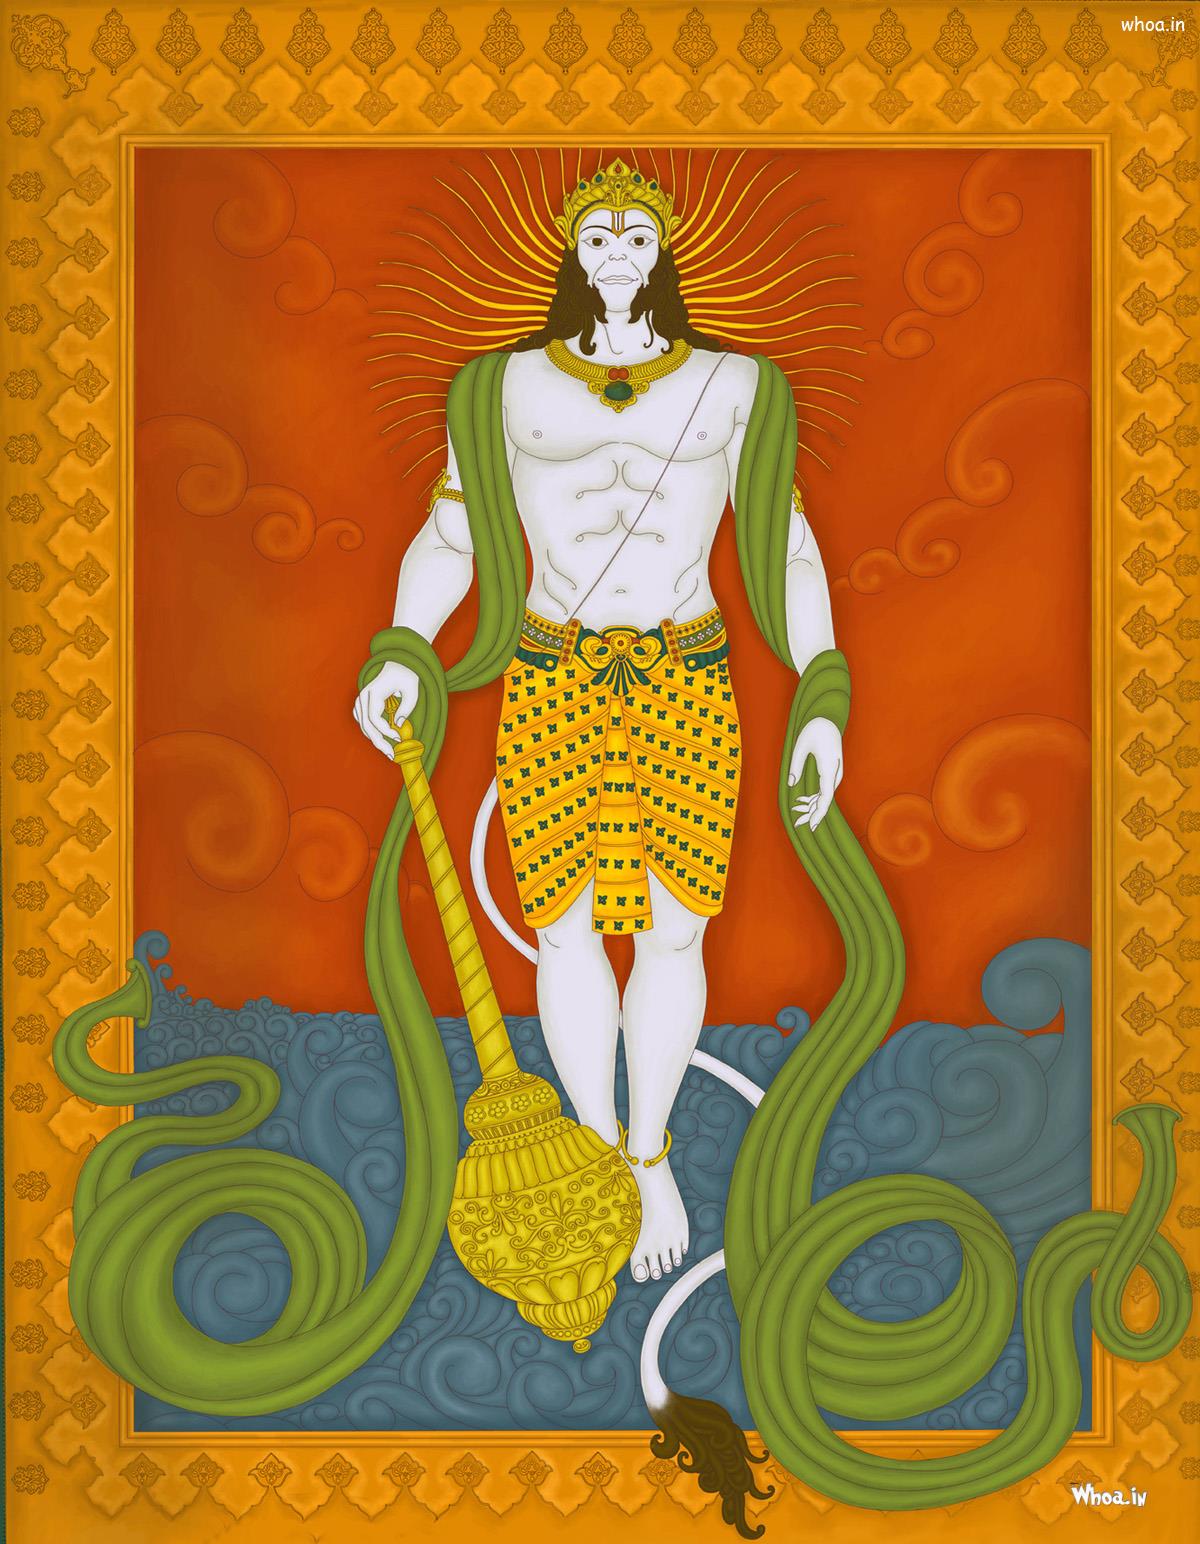 Whoa - In Logo - Lord Hanuman Paintings Hd - HD Wallpaper 